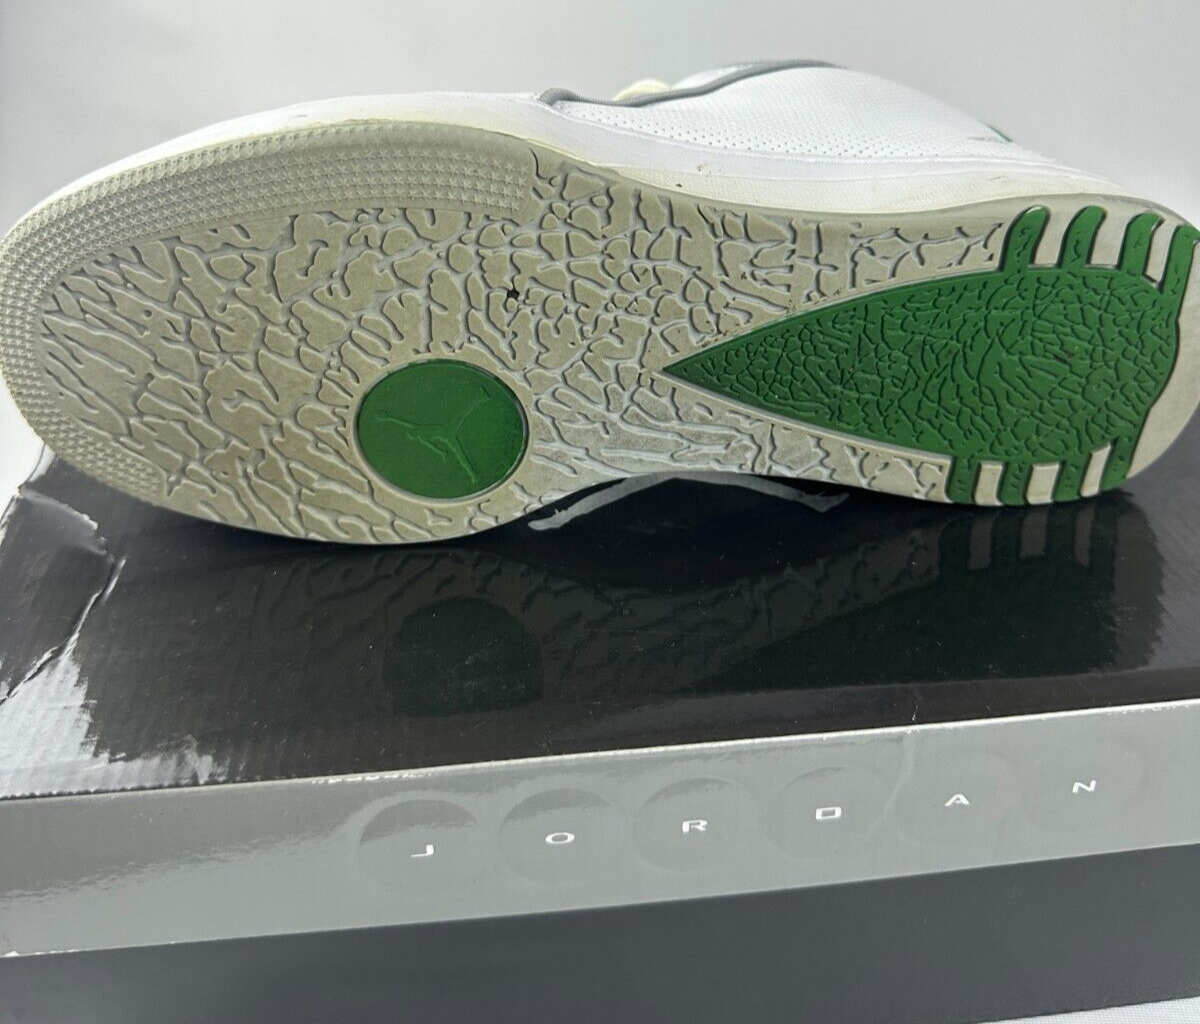 Air Jordan Mens 11 Phase 23 SC Classics White Apple Green Shoes 440562-103